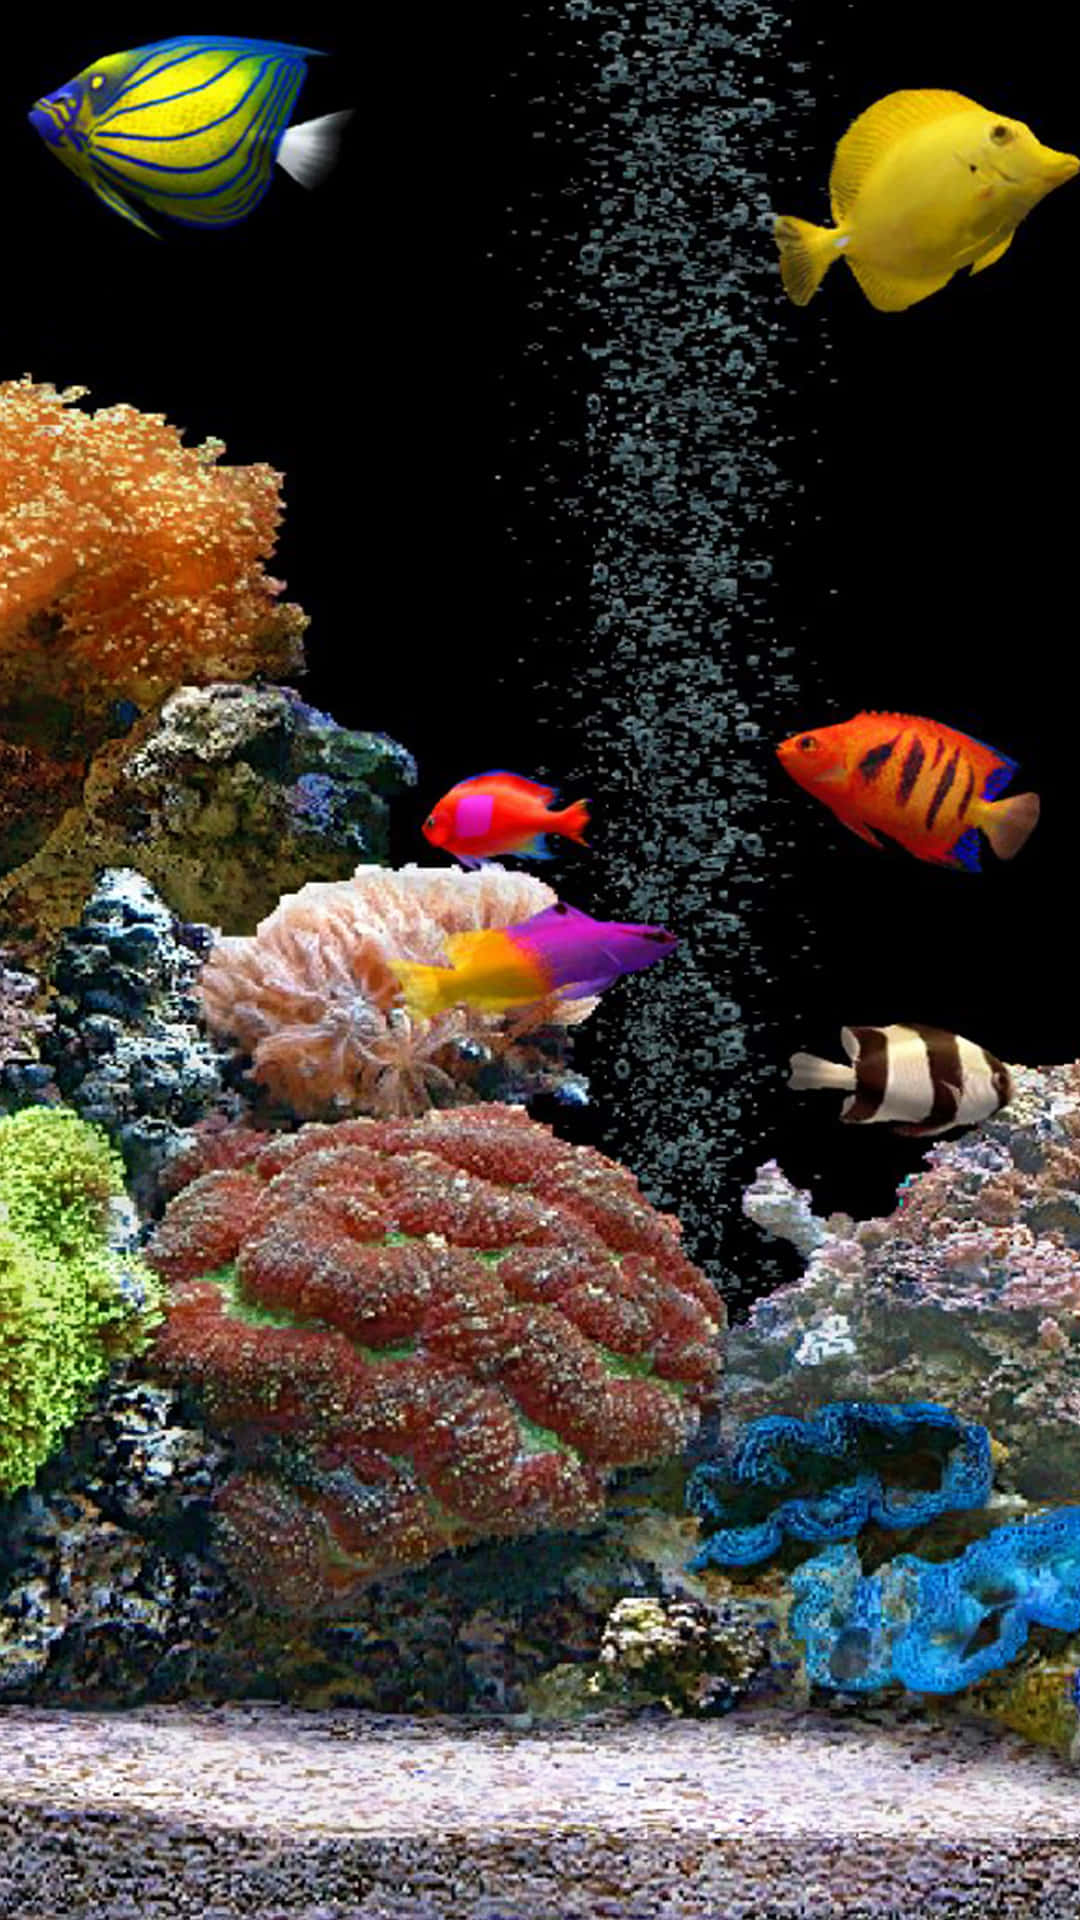 Bildhinreißendes Aquarium-iphone-hintergrundbild. Wallpaper